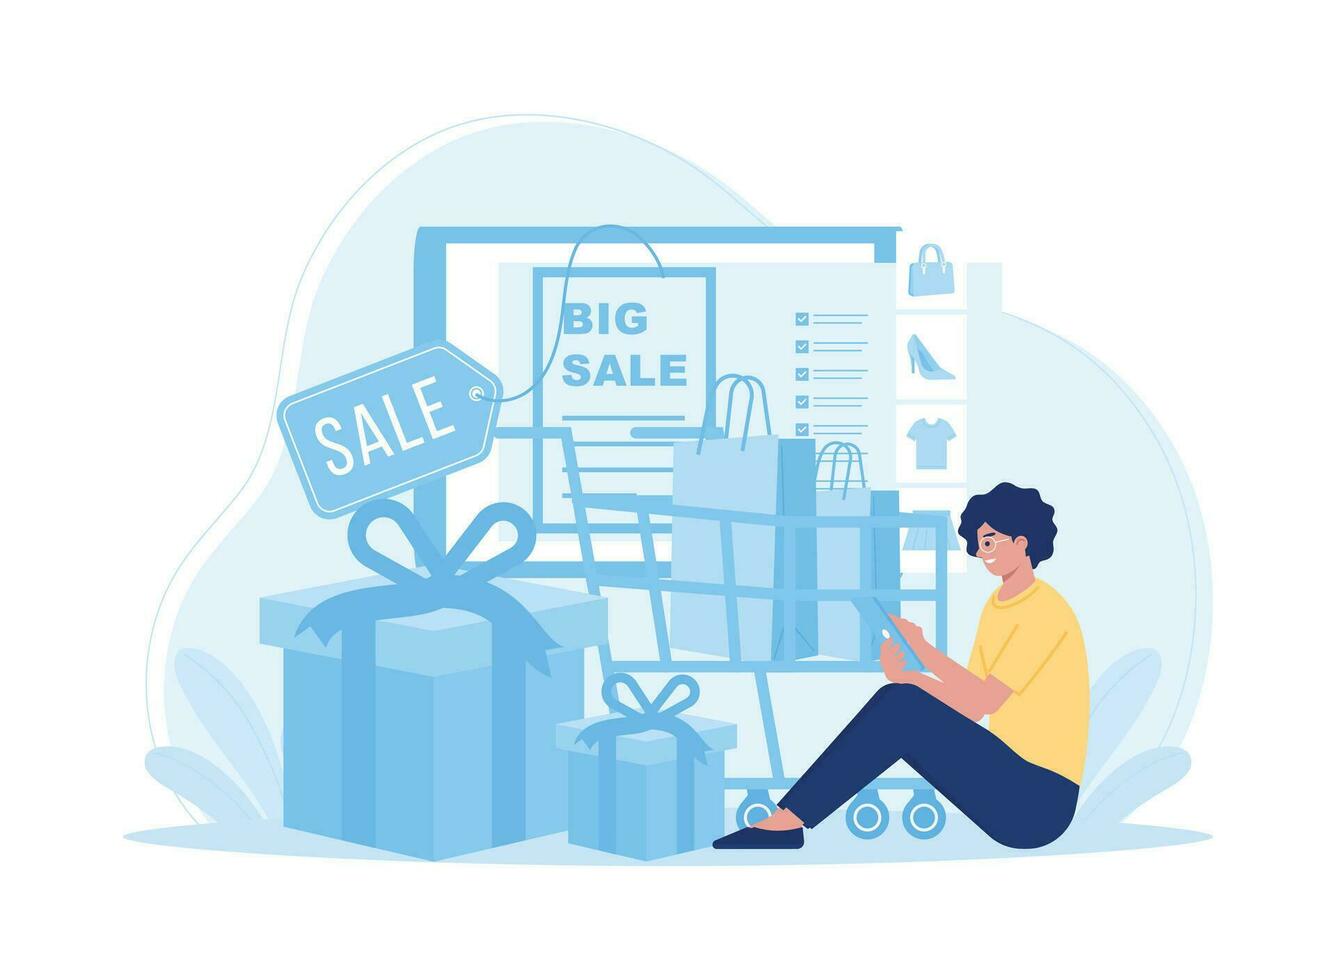 Big sales get discounts  and gift concept flat illustration vector